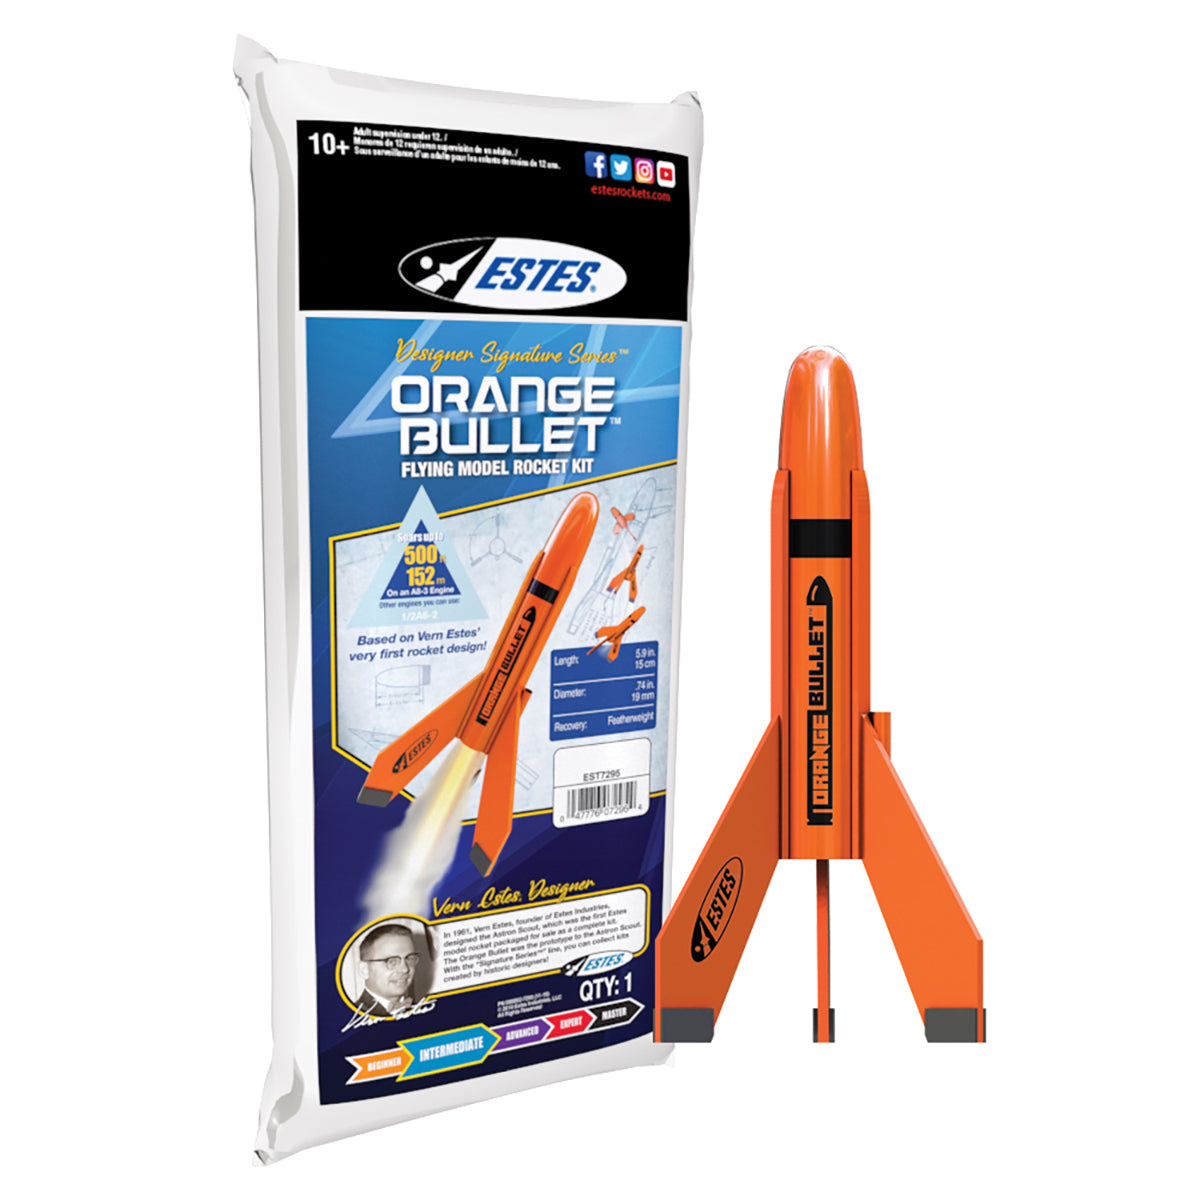 Orange Bullet Rocket Kit